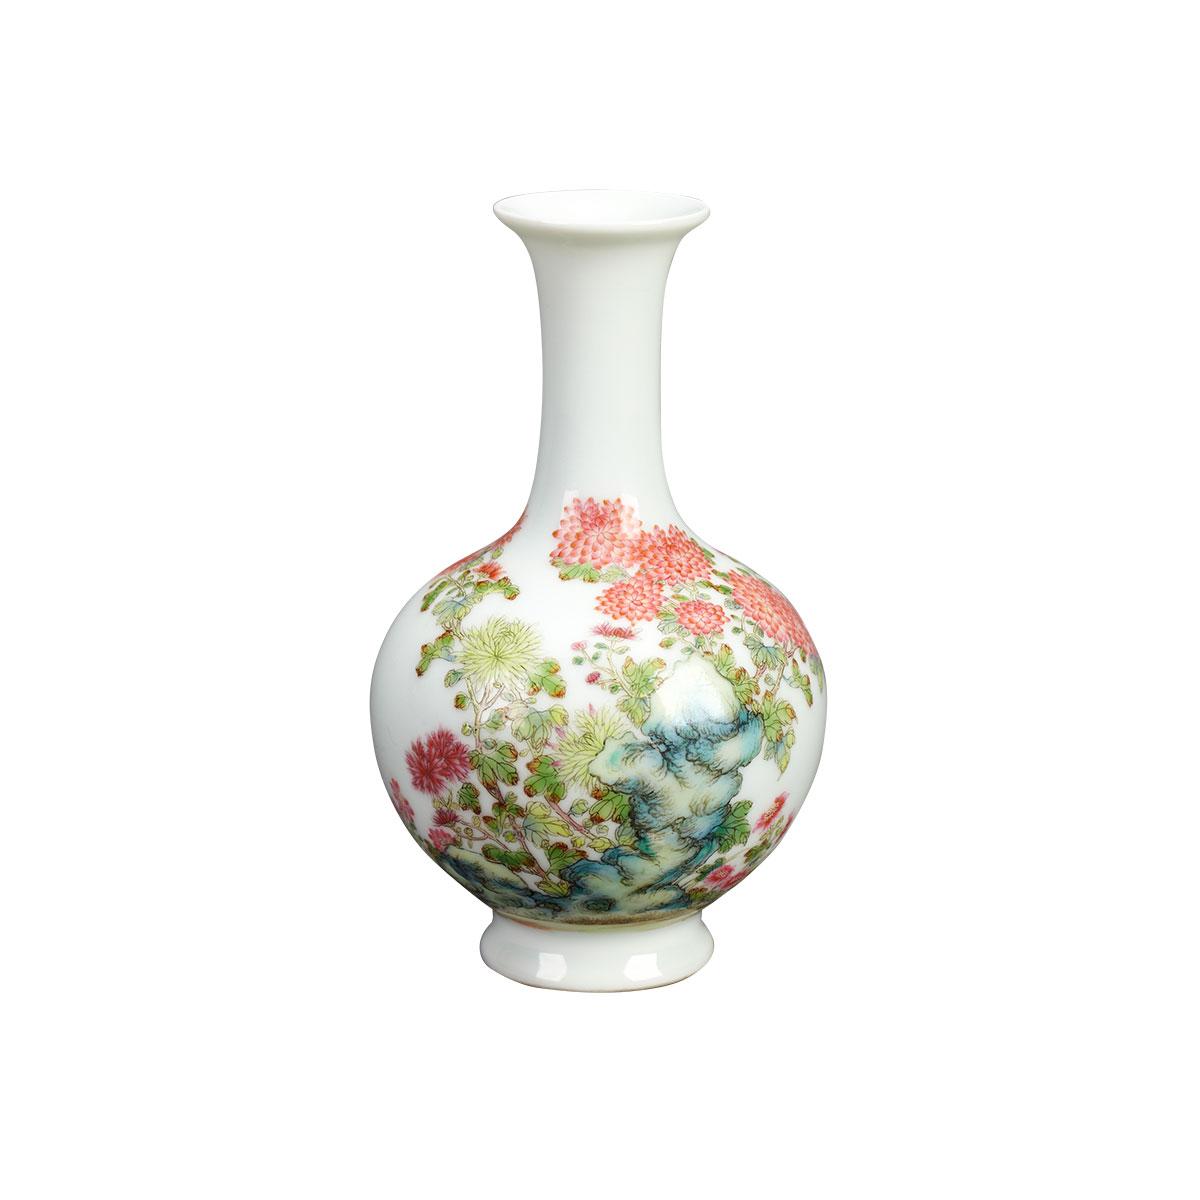 Famille Rose Bottle Vase, Qianlong Mark